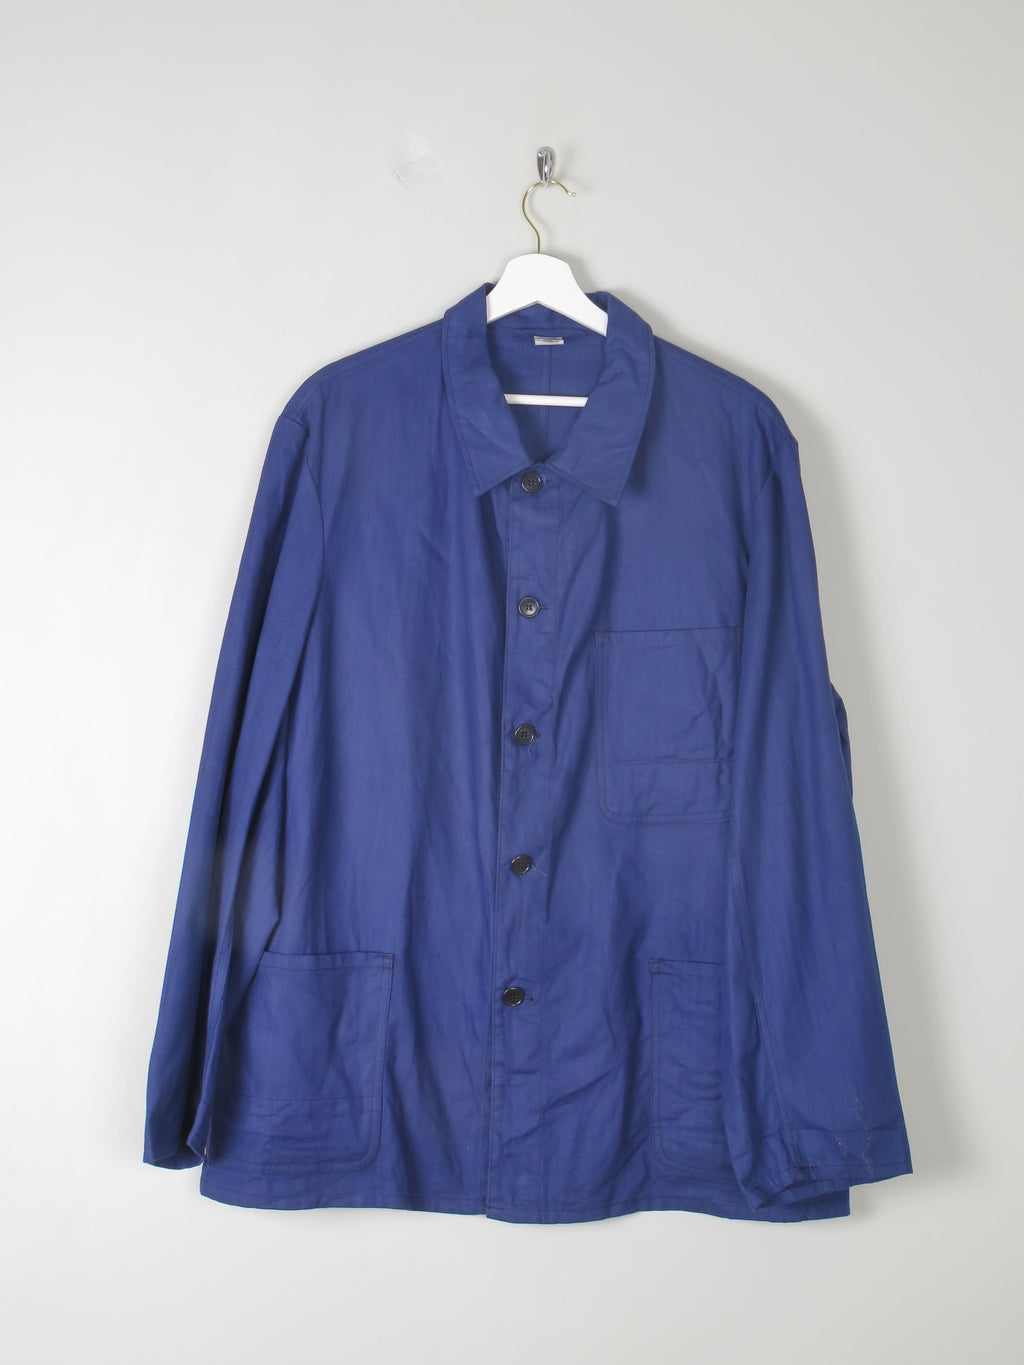 Men's Vintage Indigo Blue Work Jacket L/XL